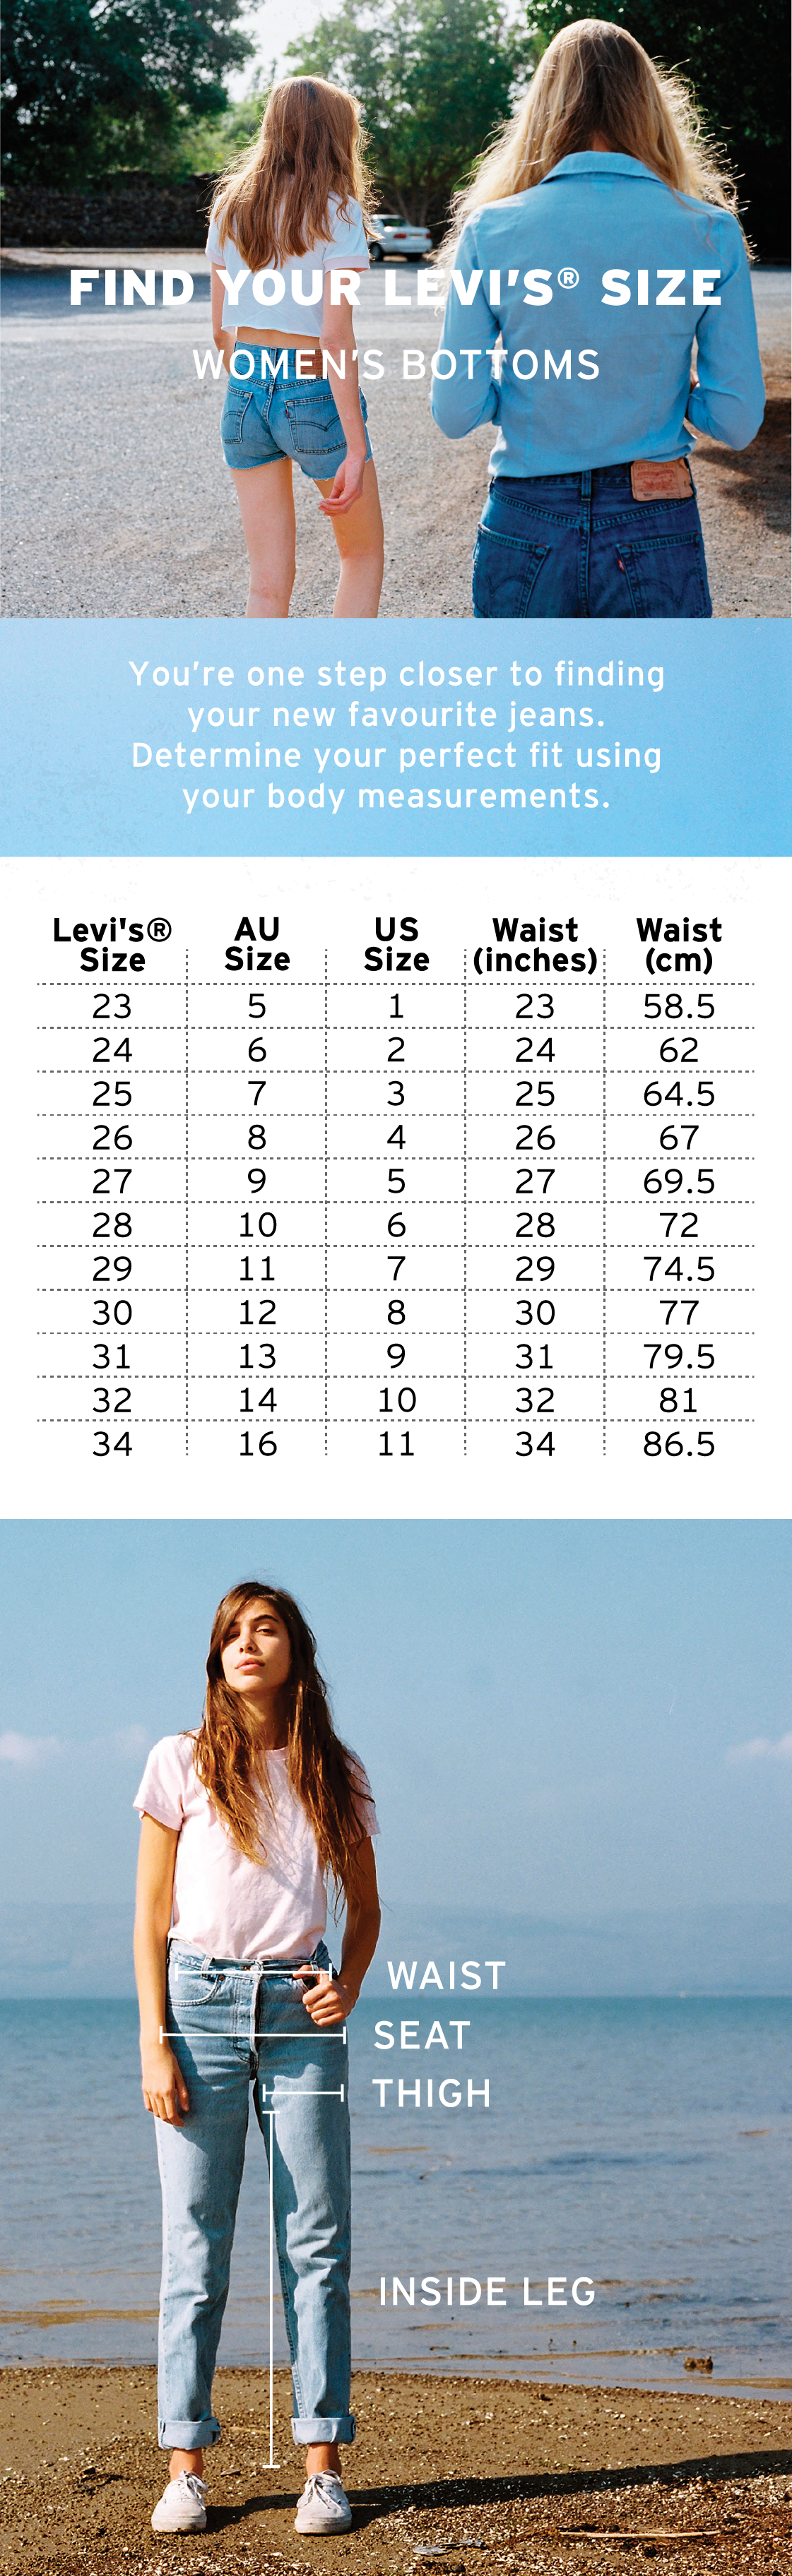 Levis® Women's Bottoms Size Guide